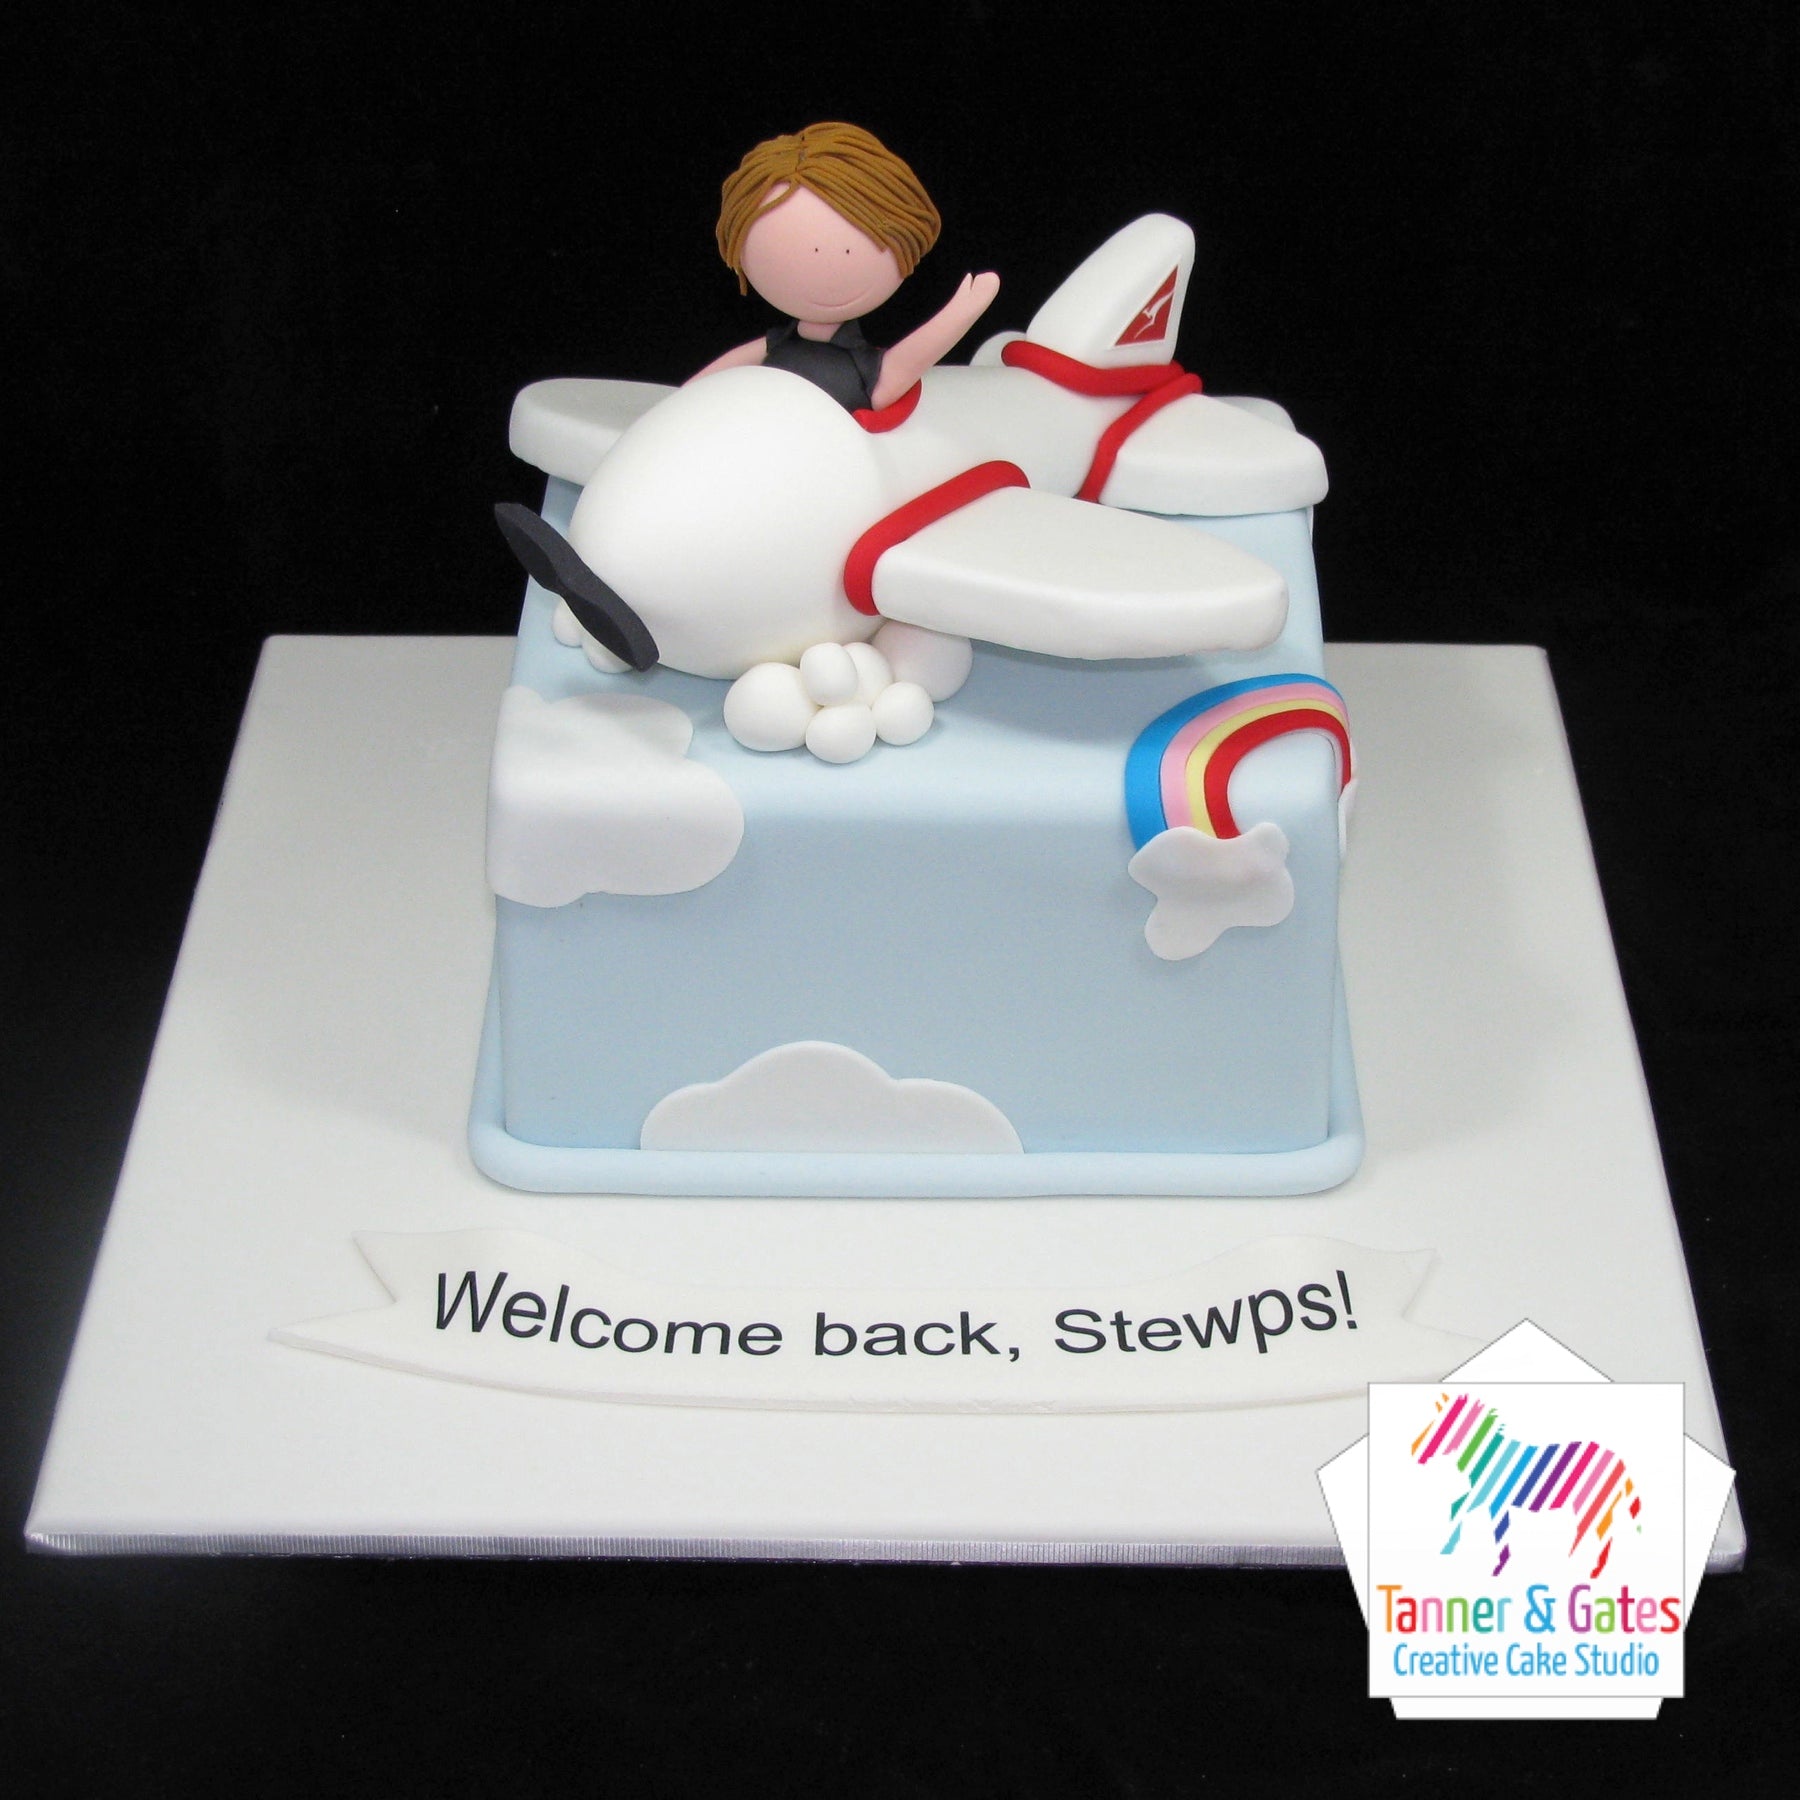 Qantas Plane Kids Birthday Cake | Aeroplane Cakes | by EliteCakeDesigns  Sydney